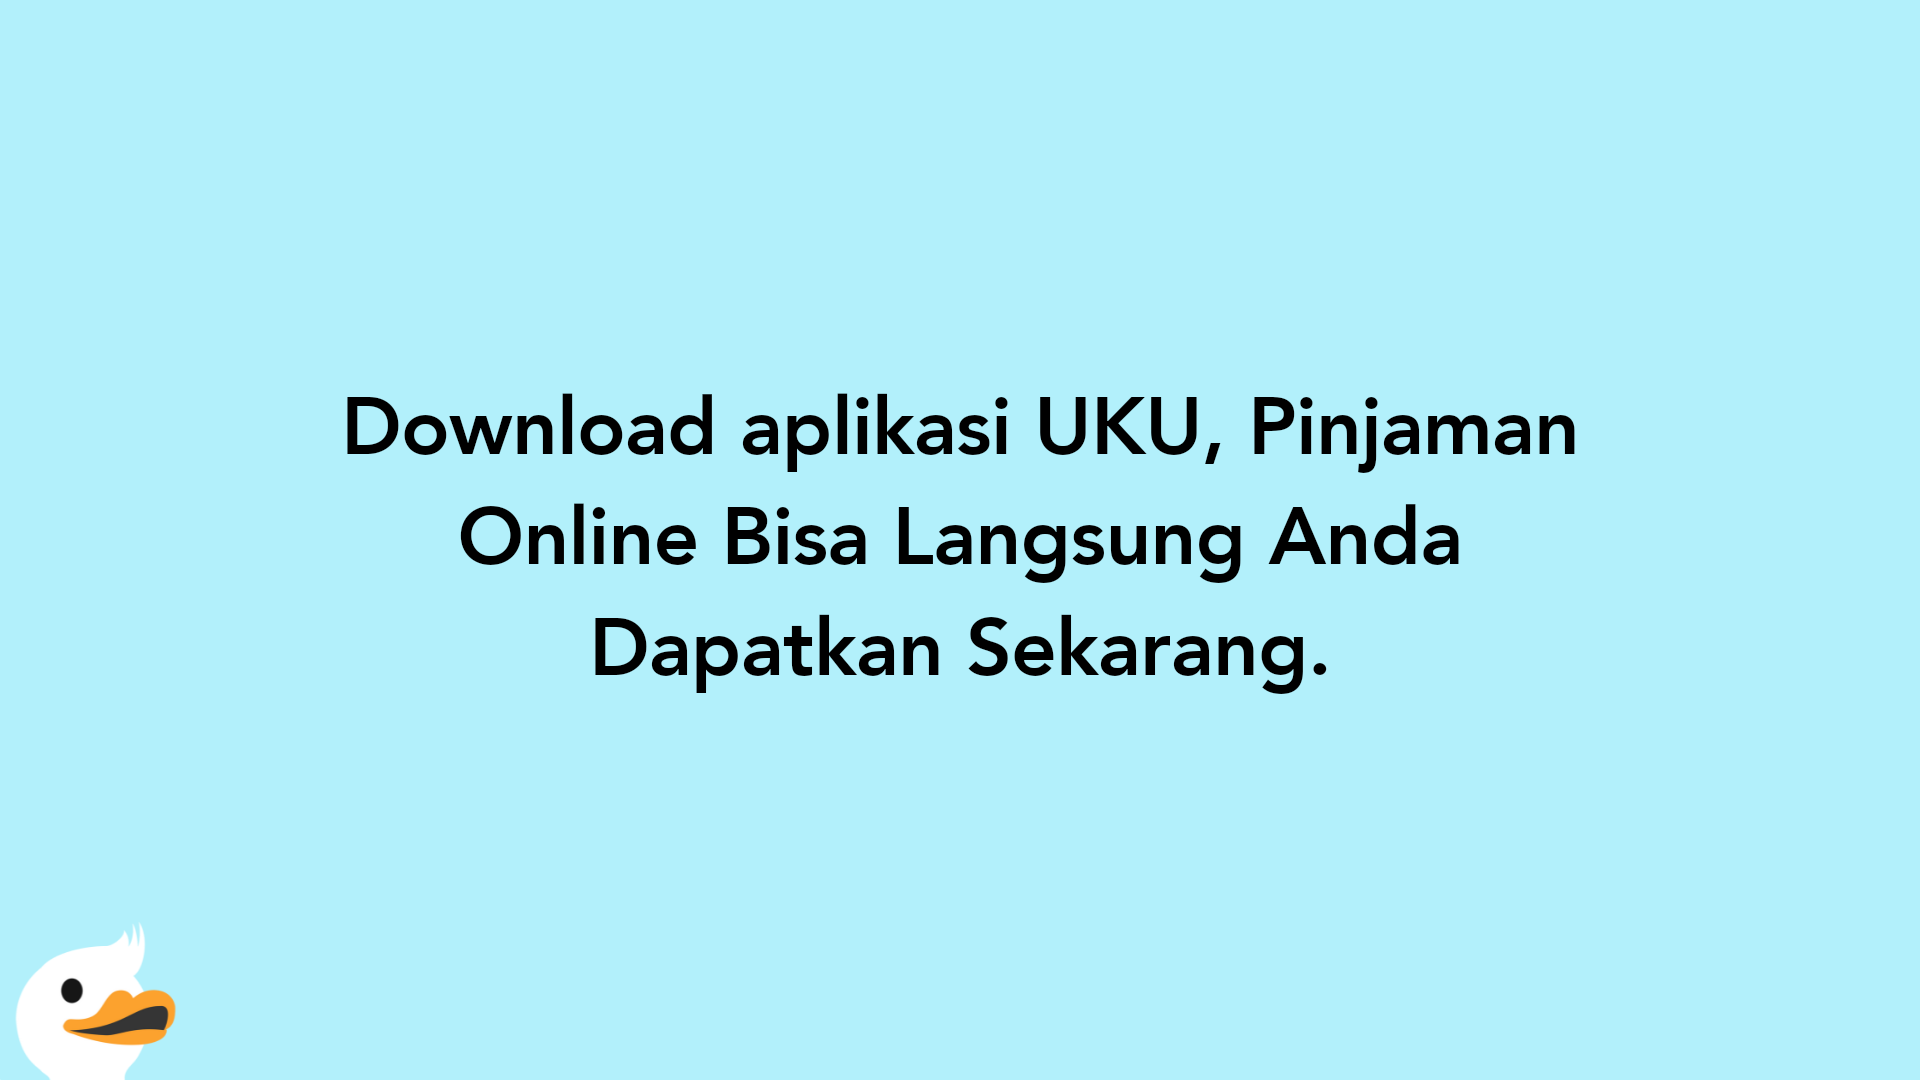 Download aplikasi UKU, Pinjaman Online Bisa Langsung Anda Dapatkan Sekarang.